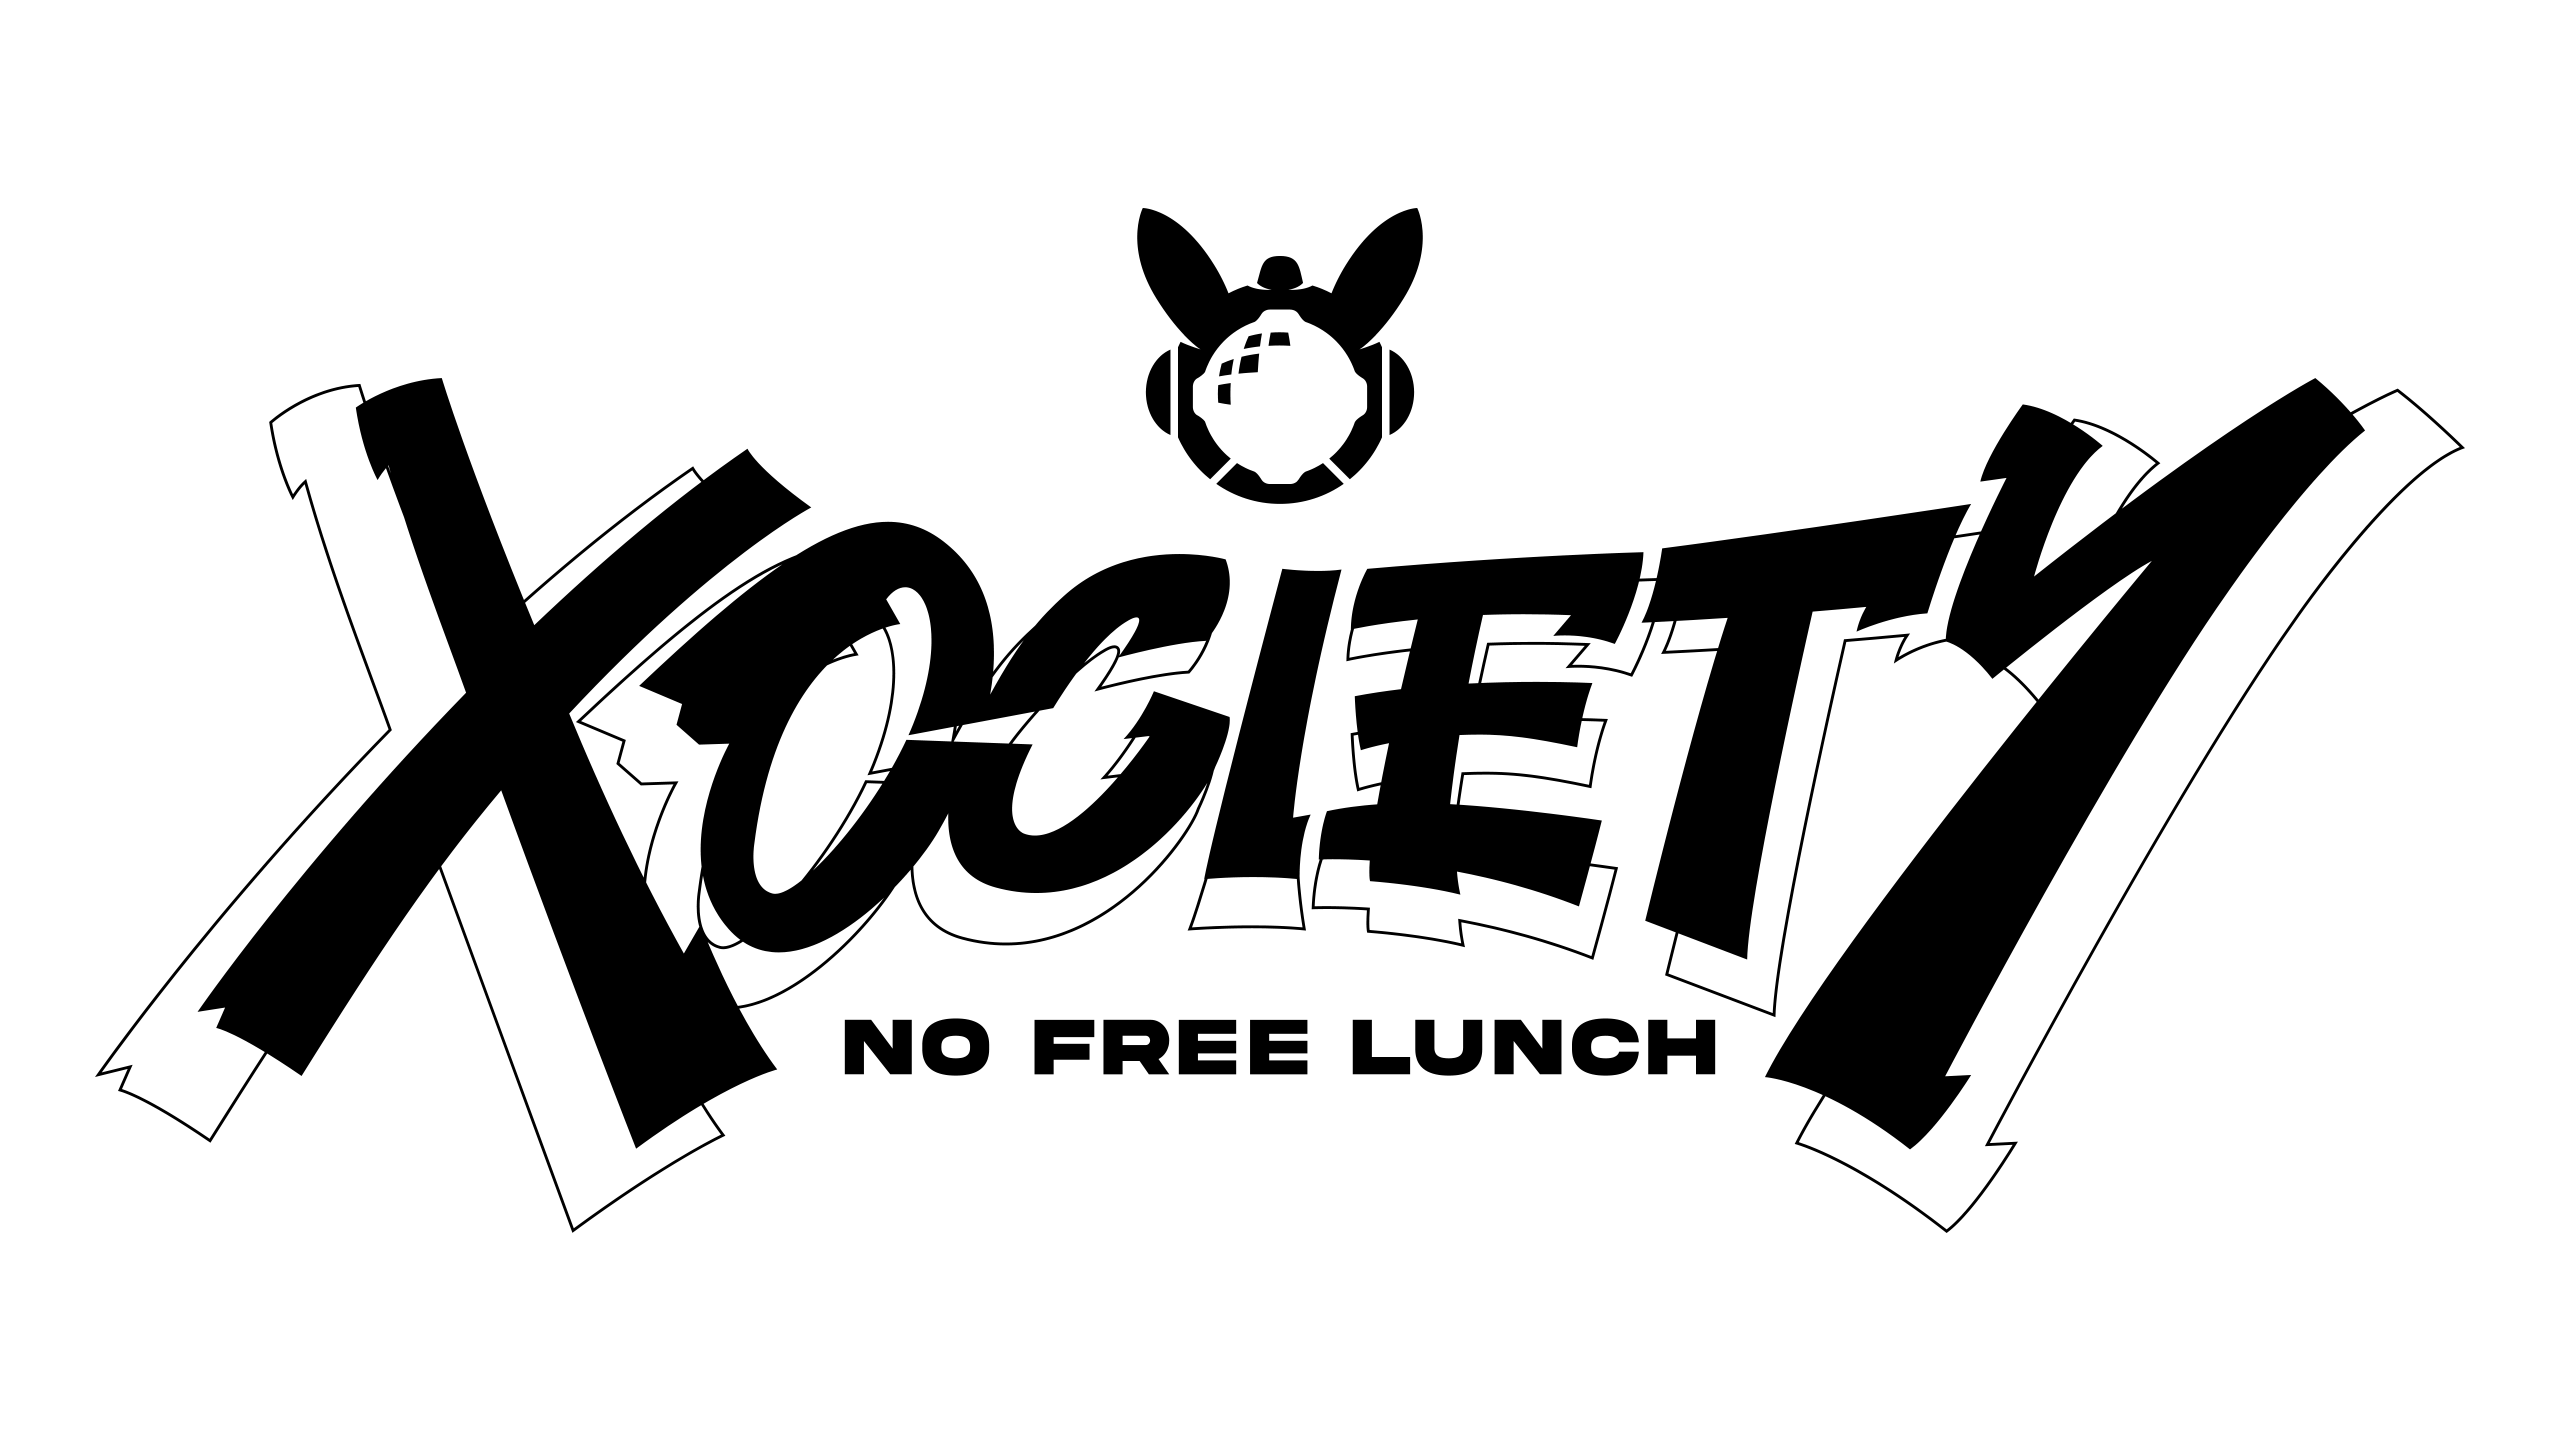 xociety-logo-black-2560x1440203201.png